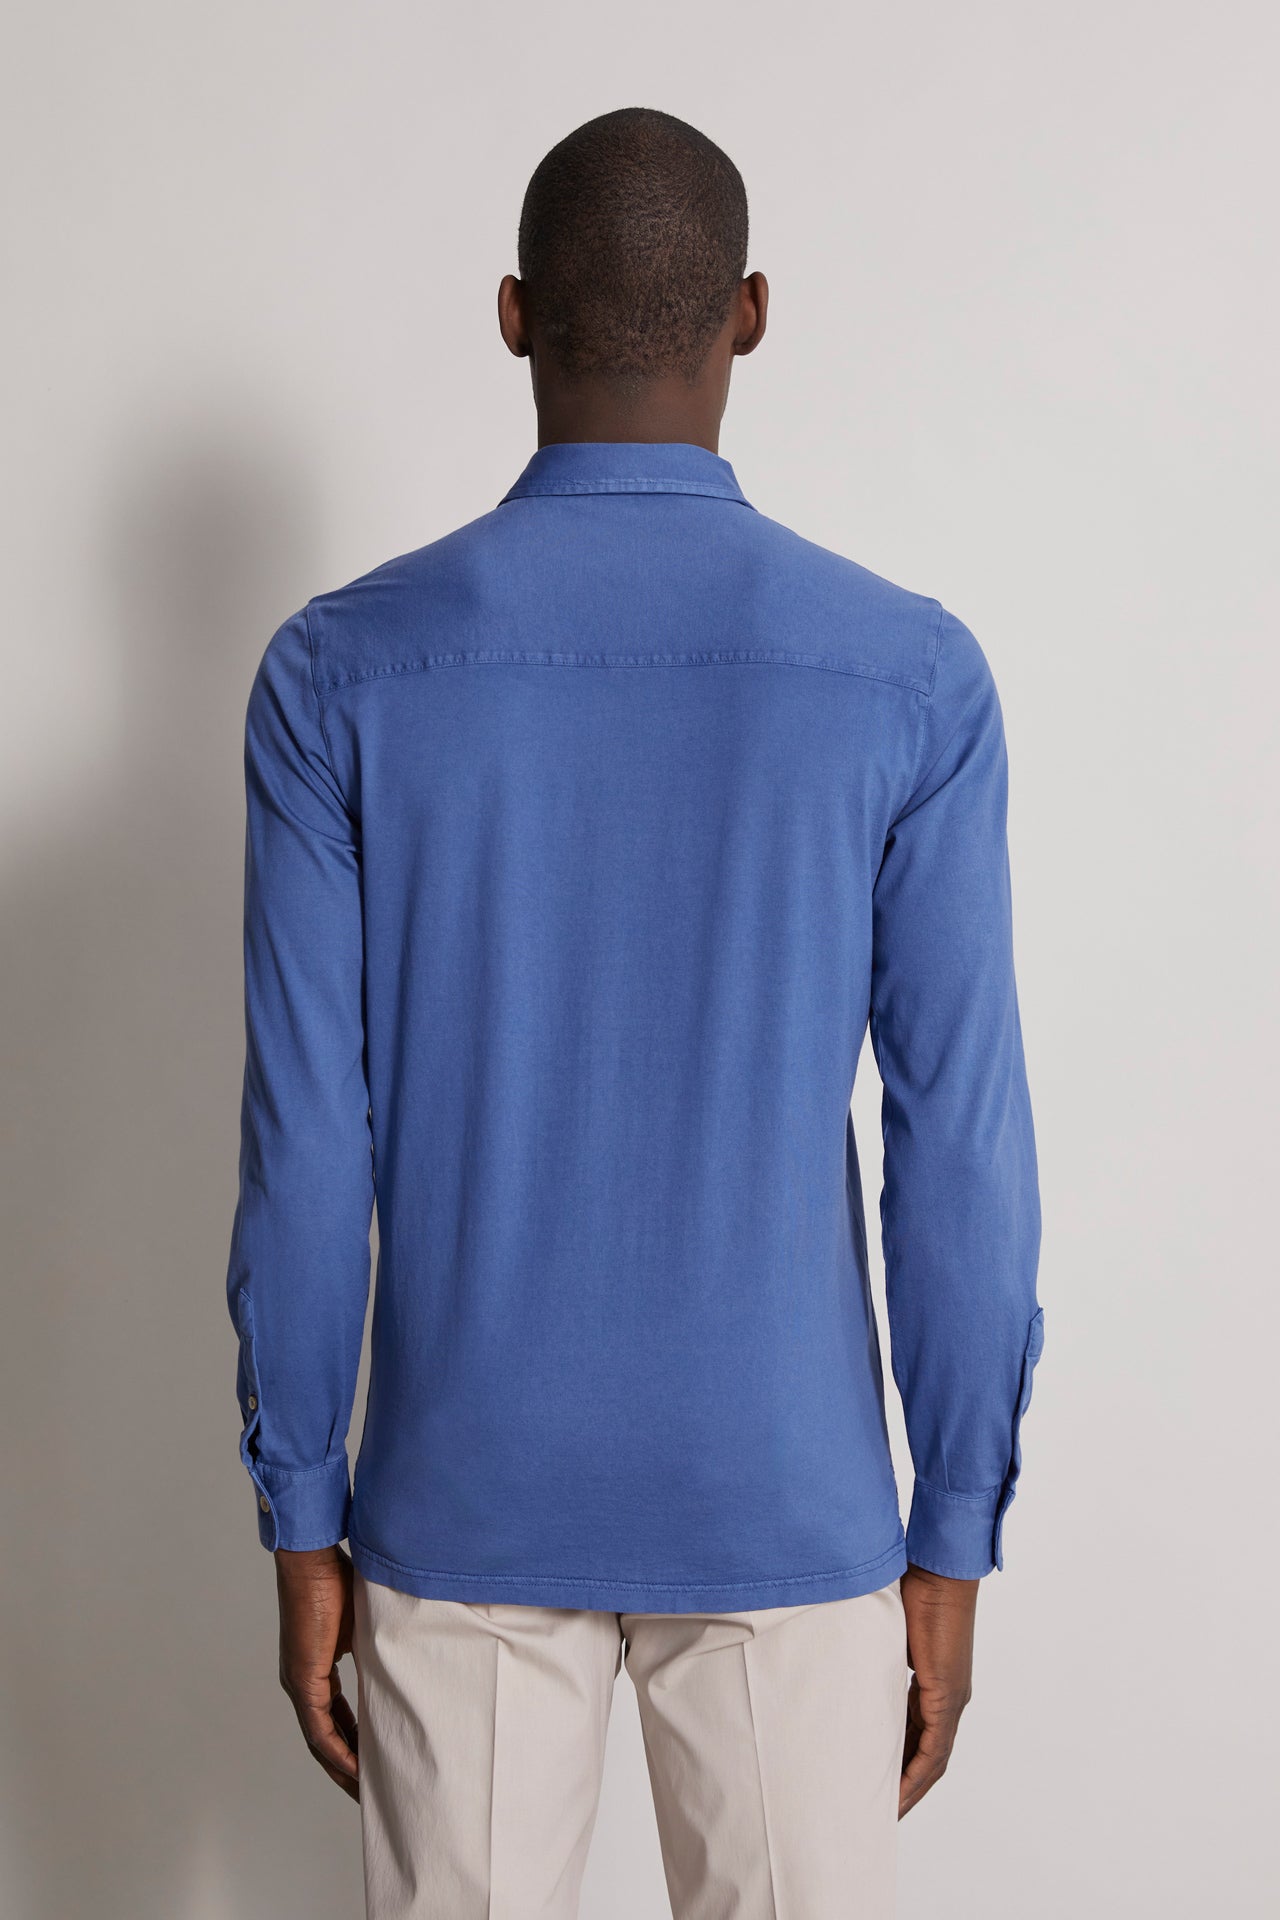 Organic Cotton Shirt - Long Sleeve - Dark Blue - Back View